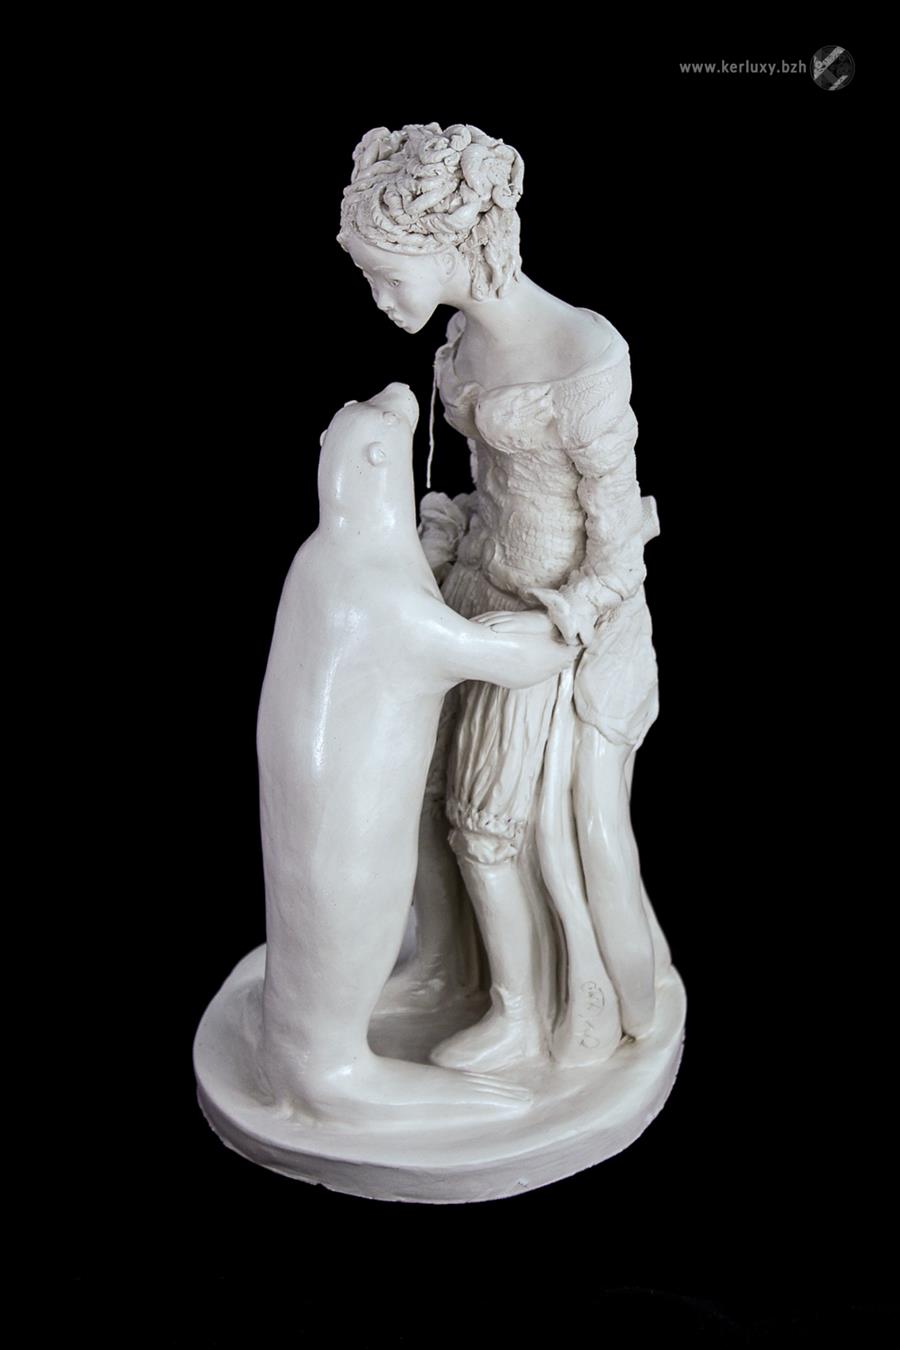 Sculpture - The girl and the sea lion - Mylène La Sculptrice